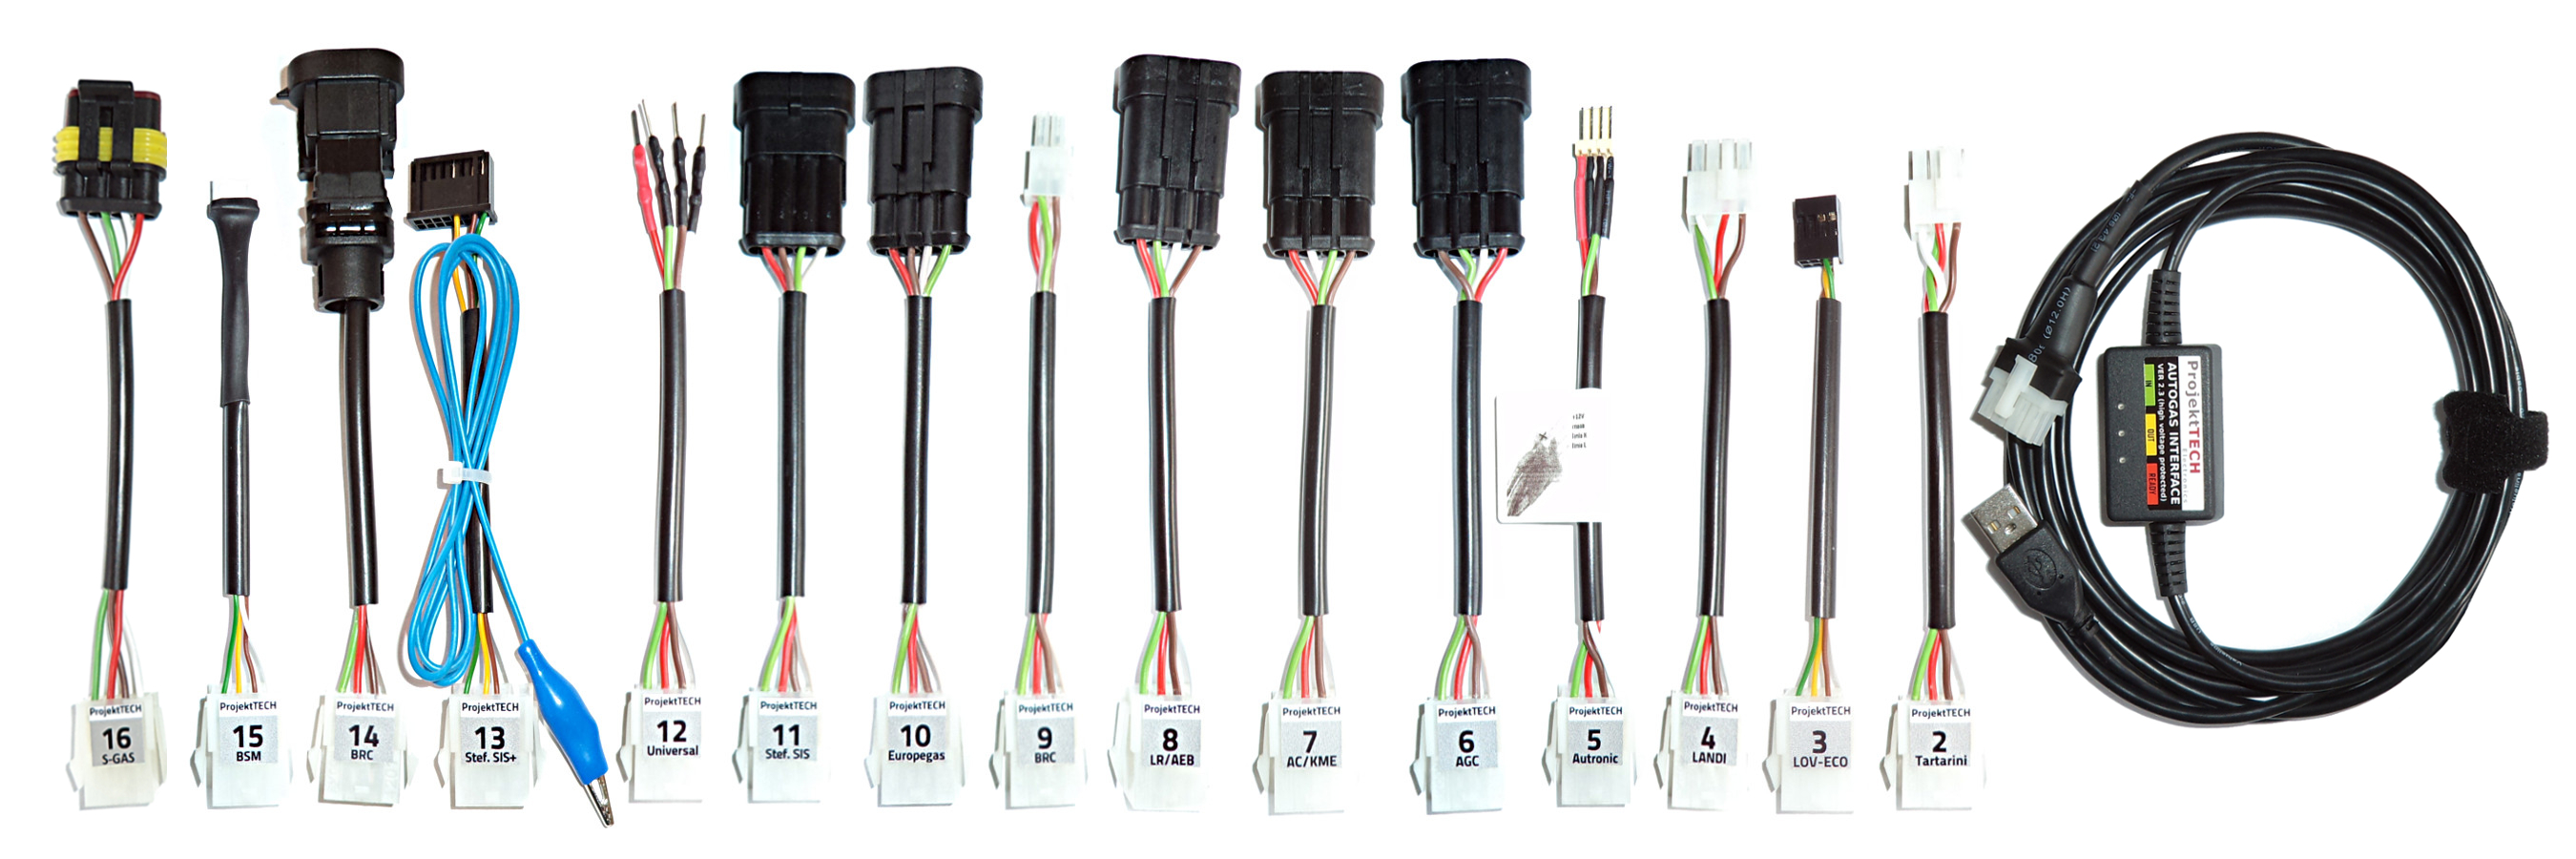 Set of 16 cables kme, stag, autronic, just heavy, tartarini, lendi, lov-eco, compact, landi renzo, brc, s-gas, europegas, stefanelli, universal, sis, bsm